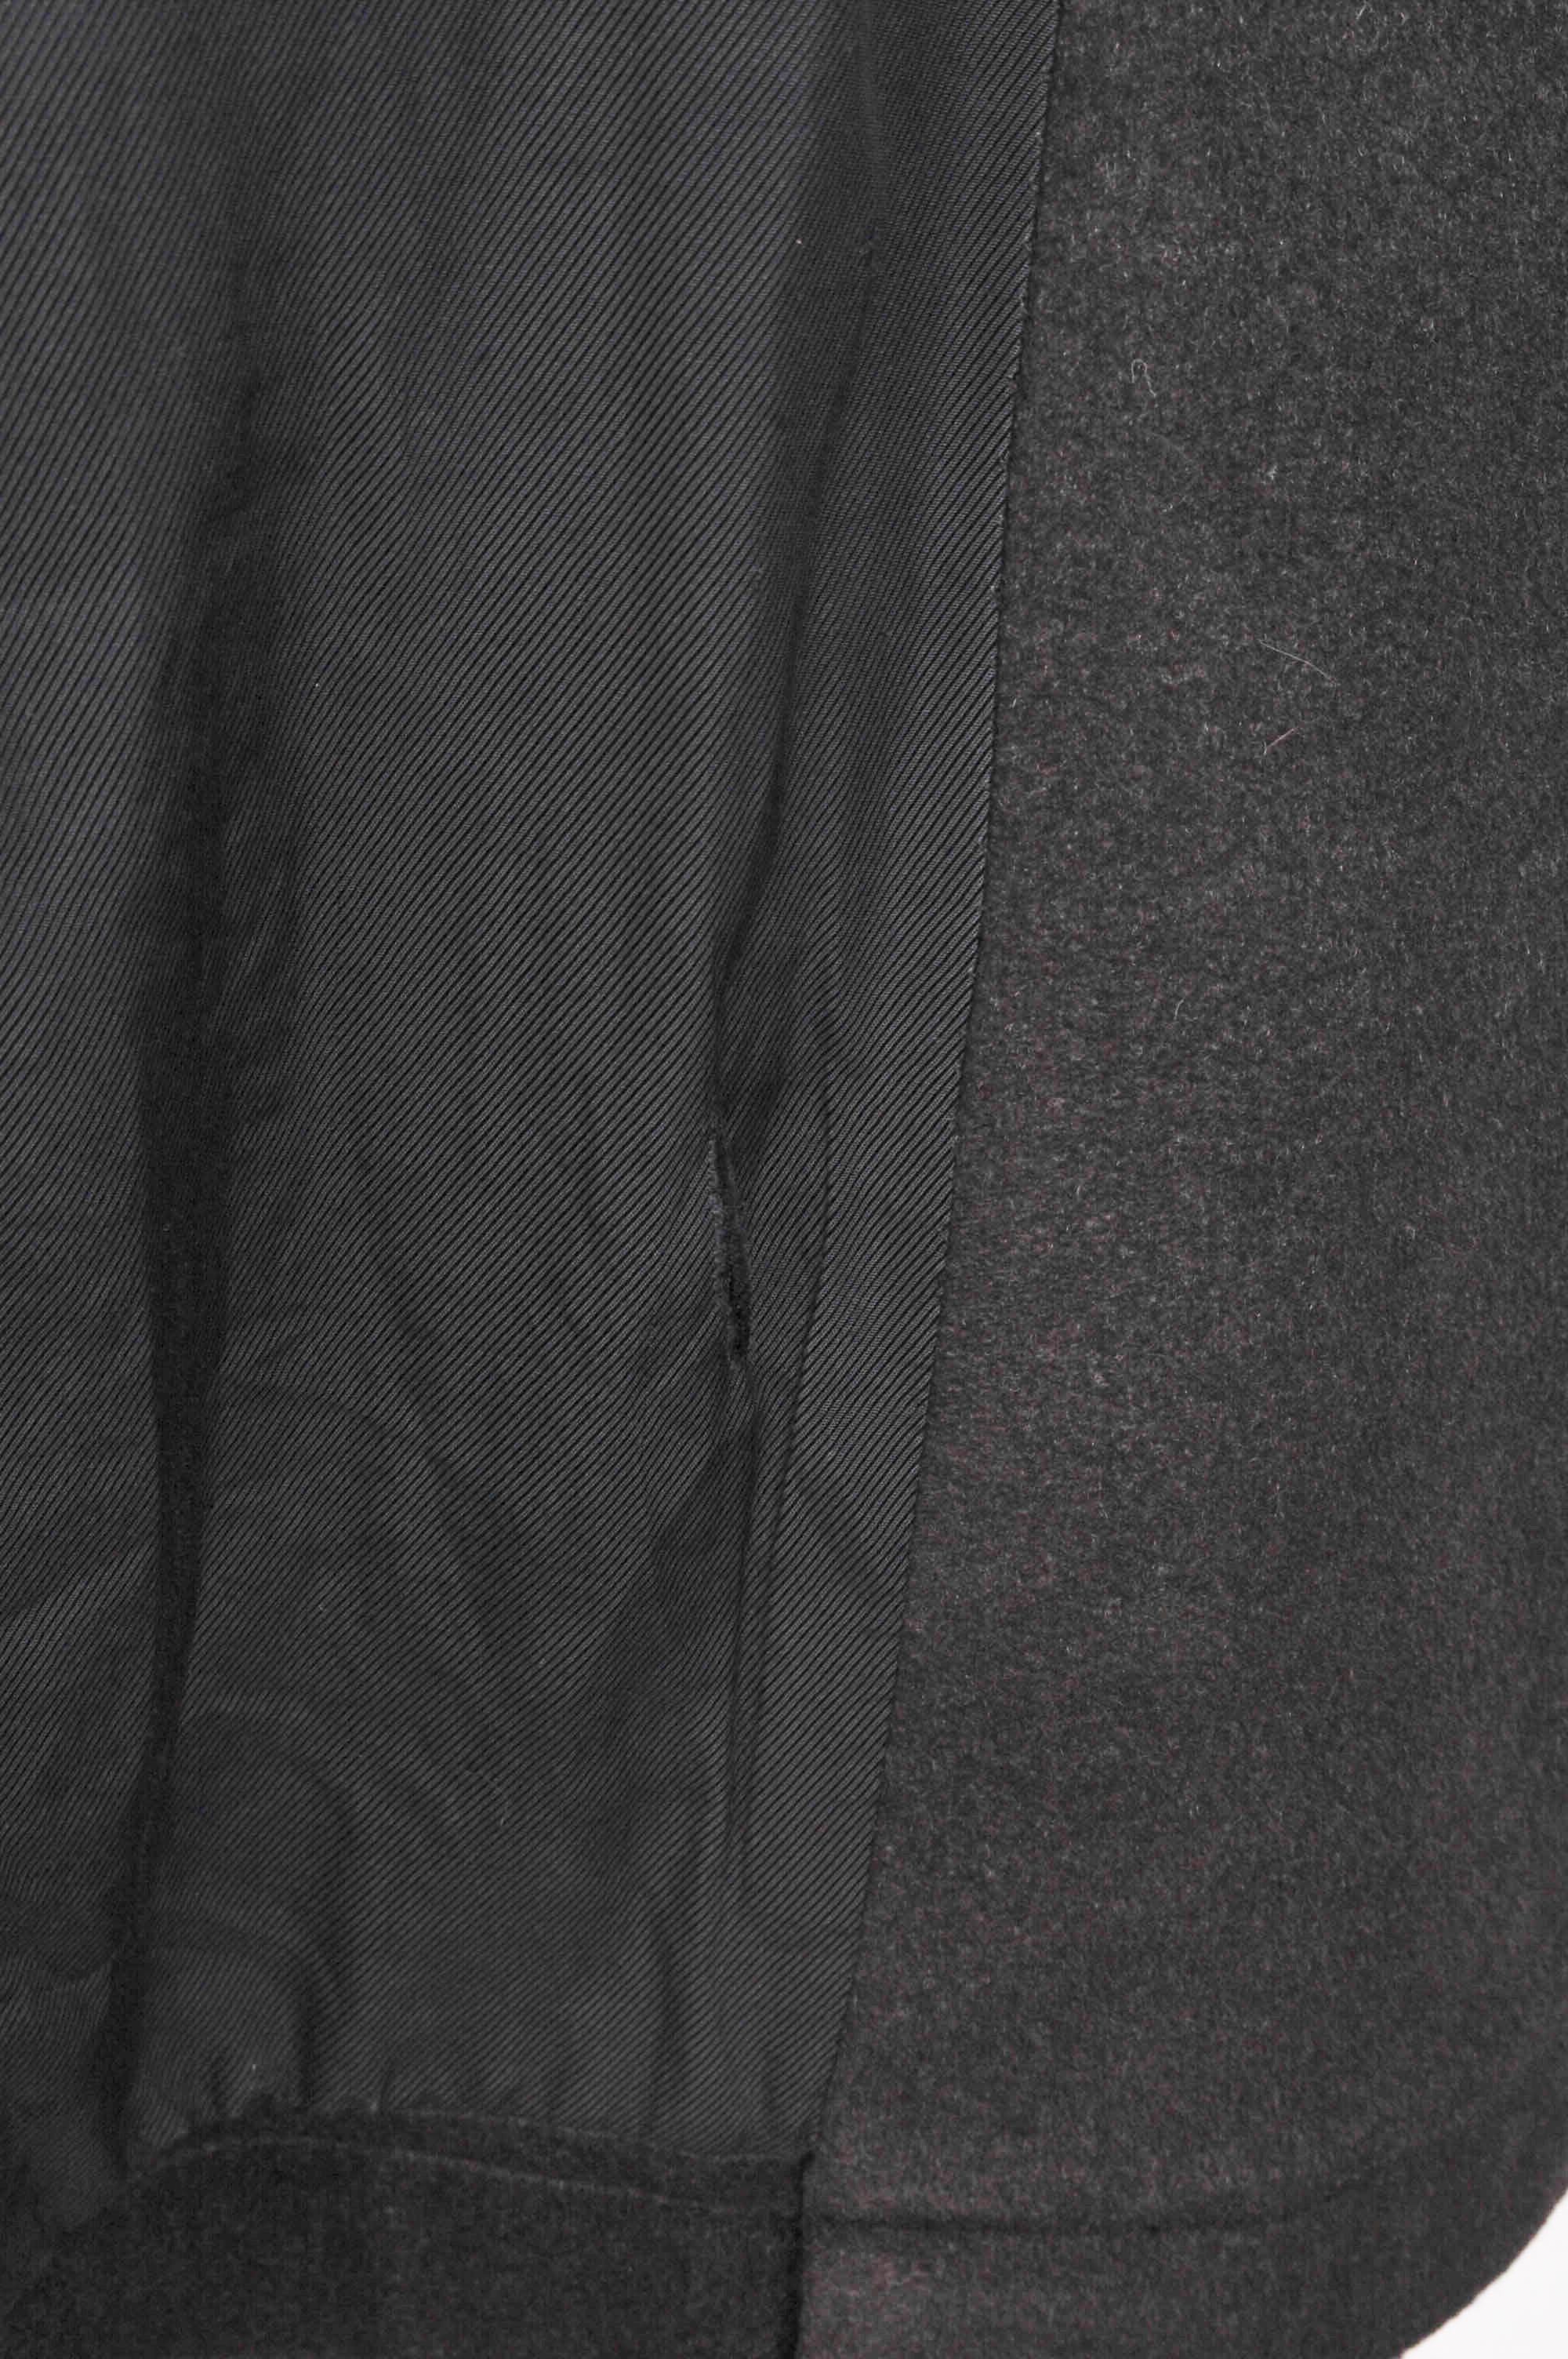 Dior Homme Hedi Slimane Leather Details Peacoat Men Coat Size 48IT (M/L) 3